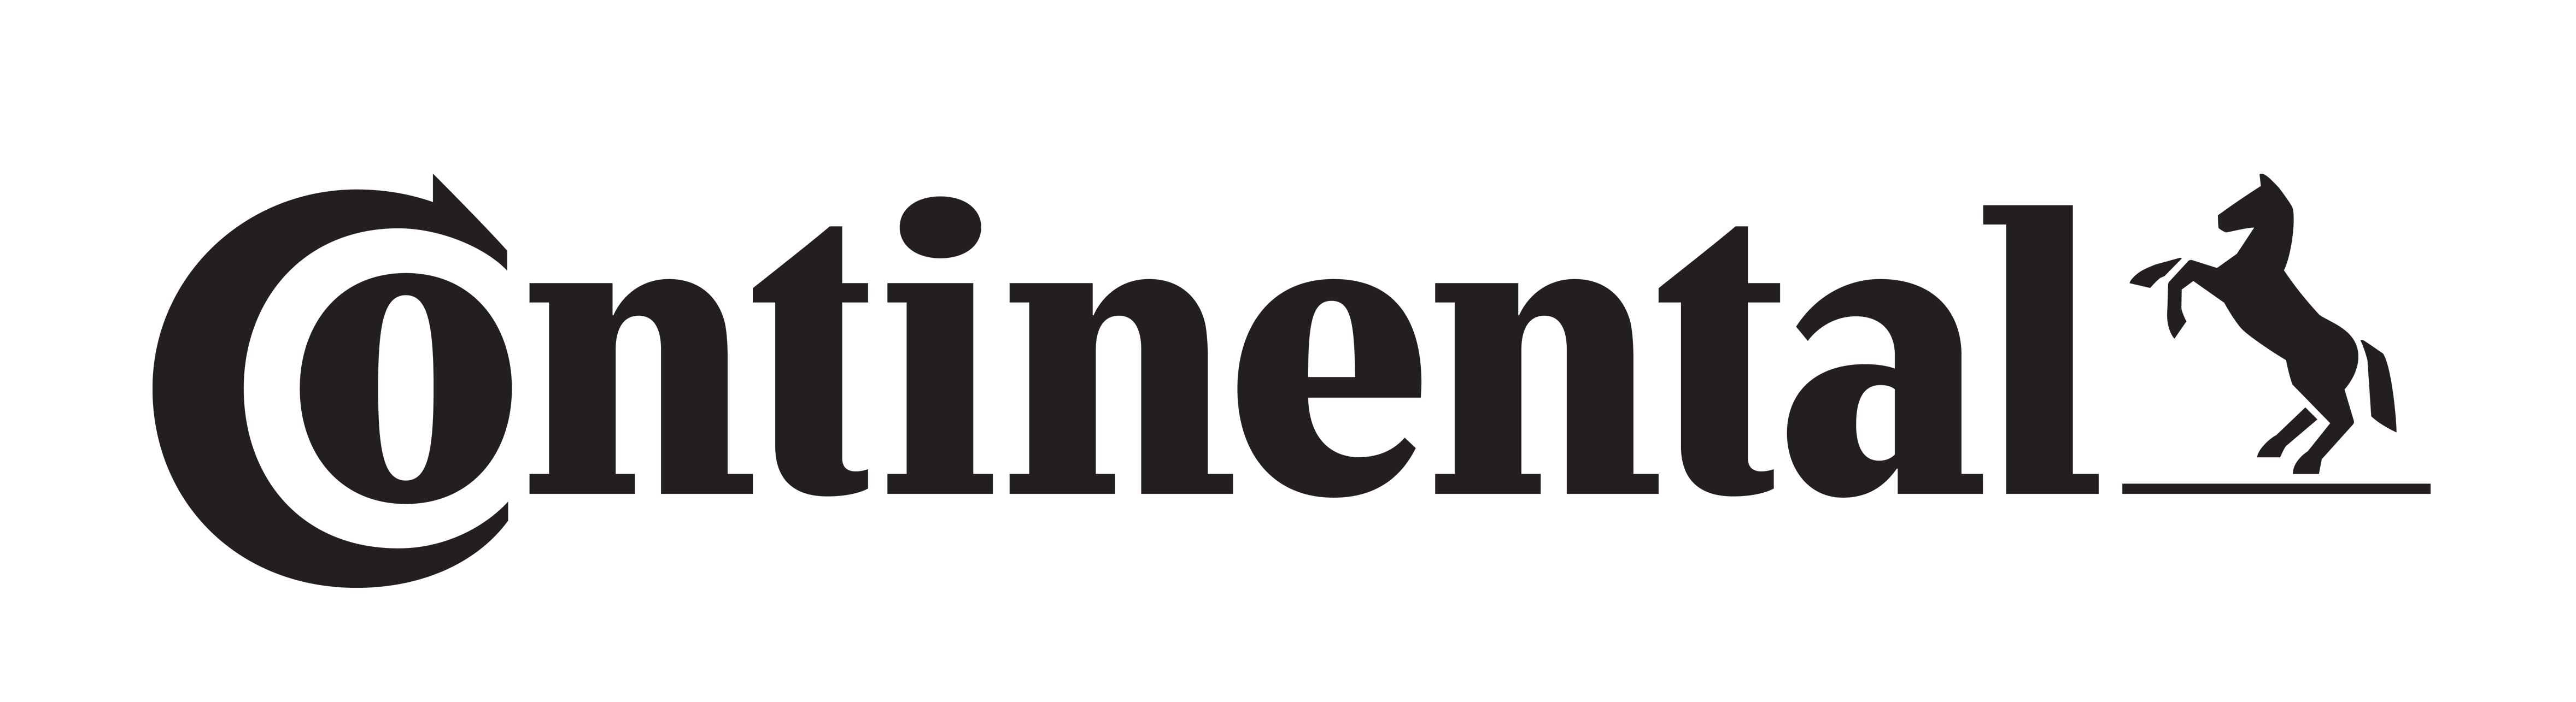 continental-logo-black